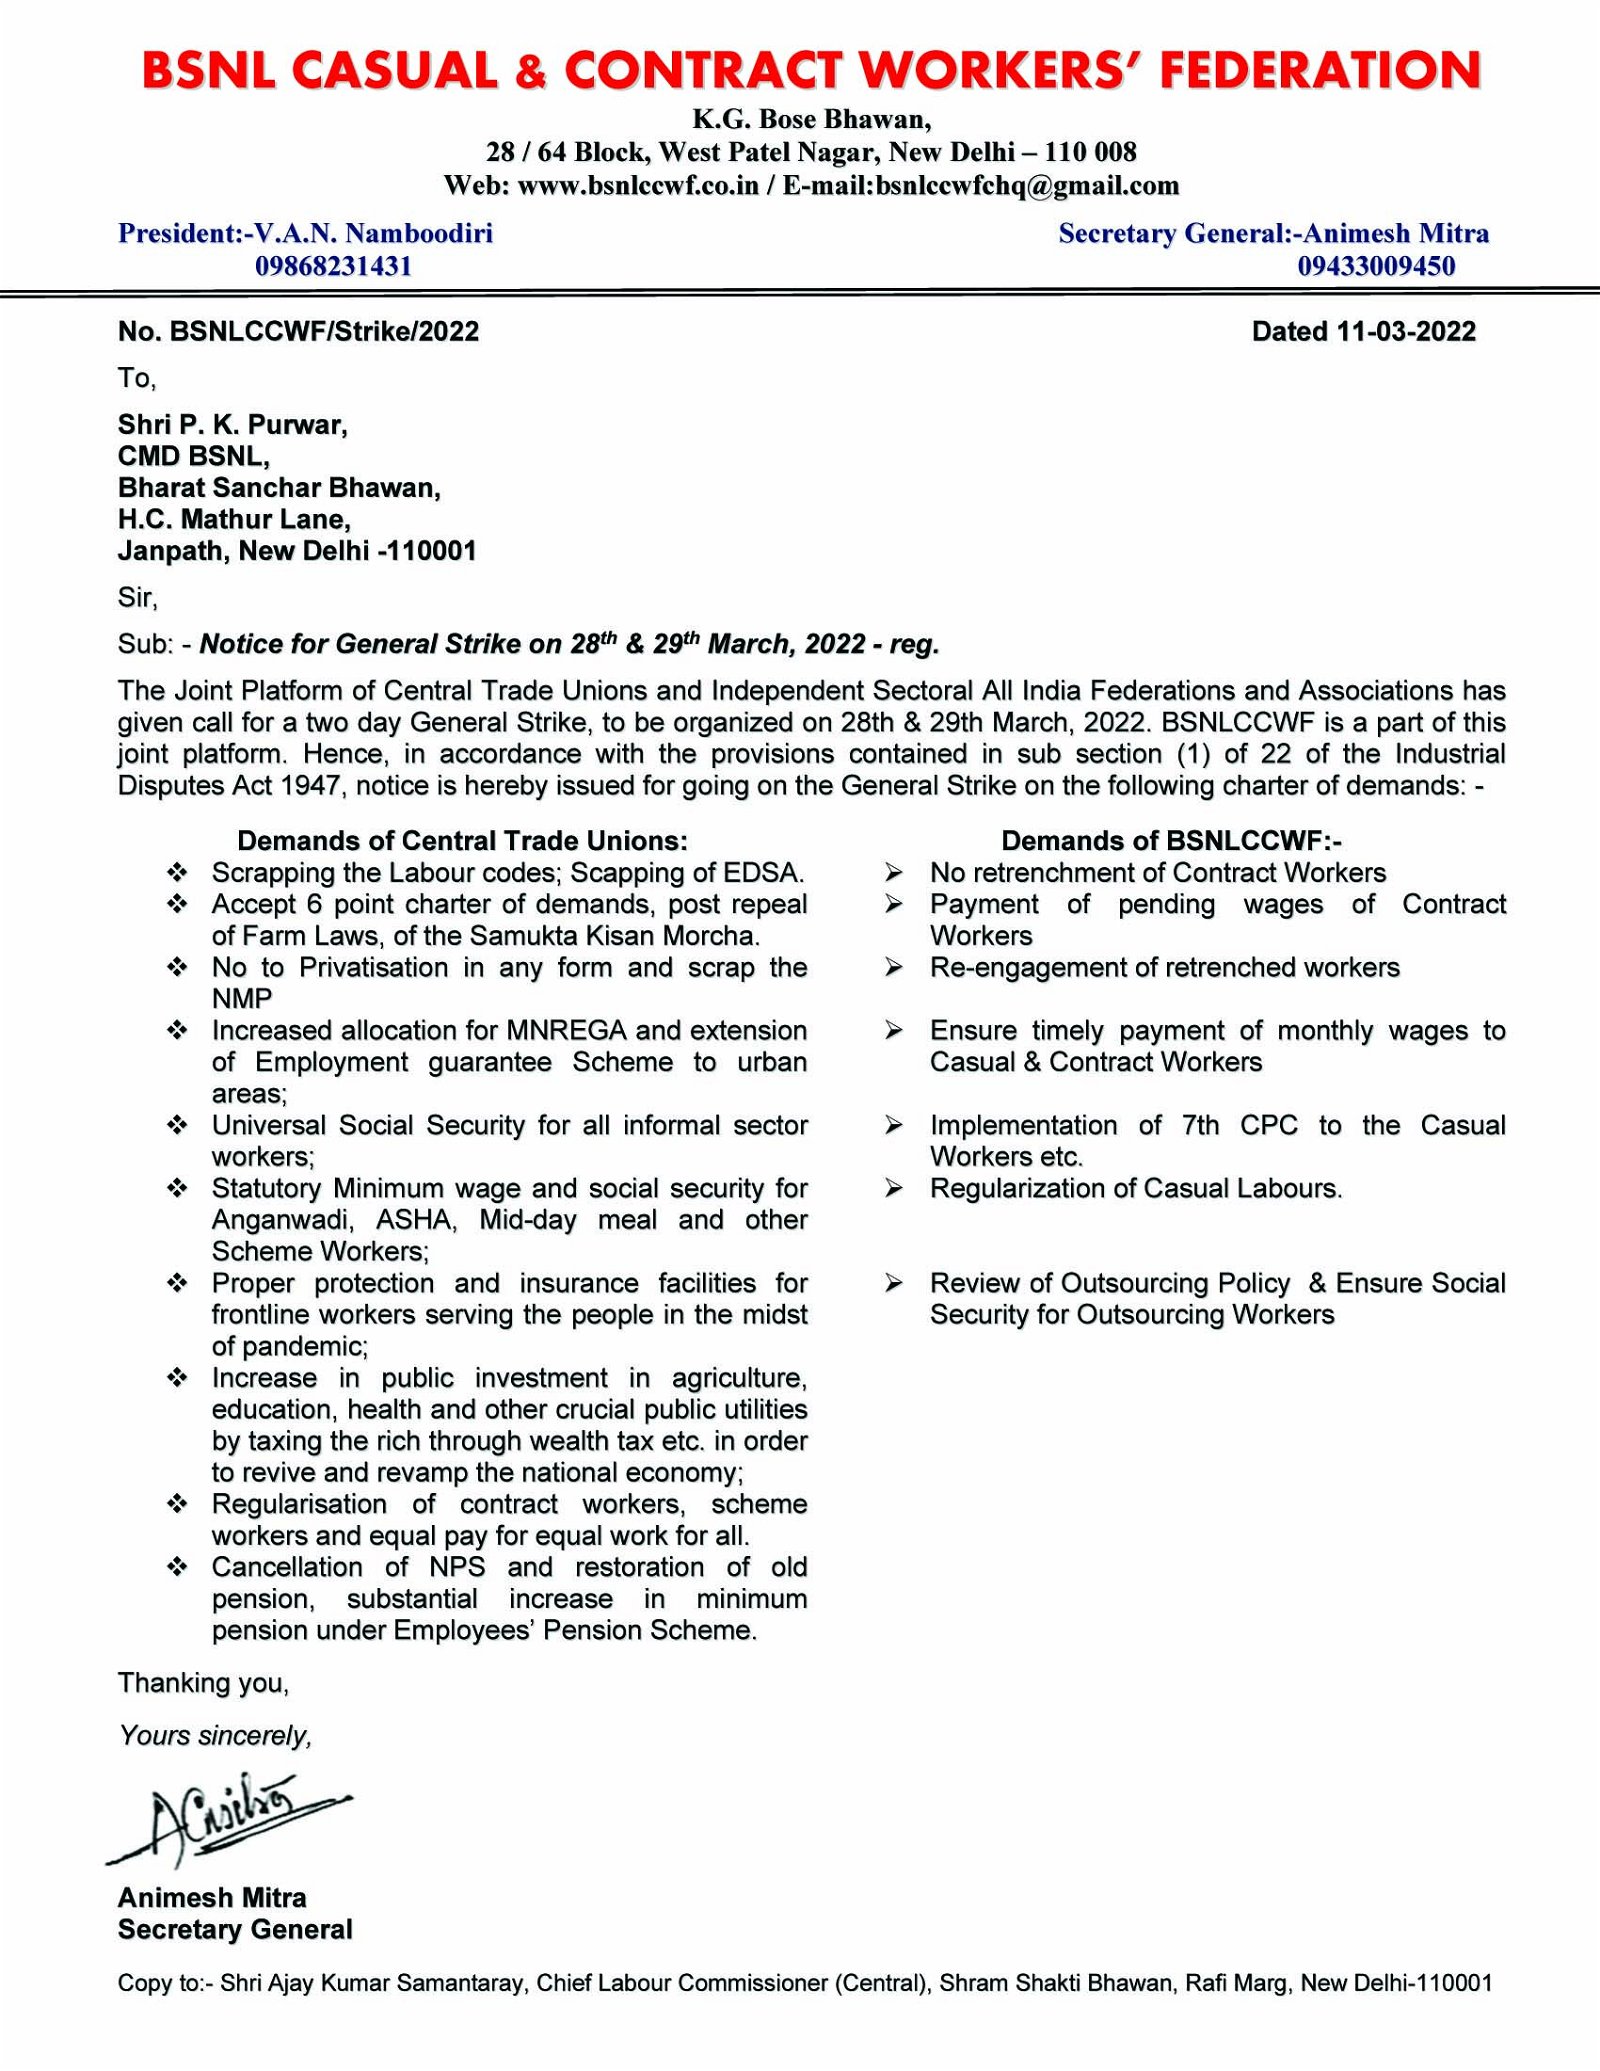 strike notice of BSNLCCWF copy